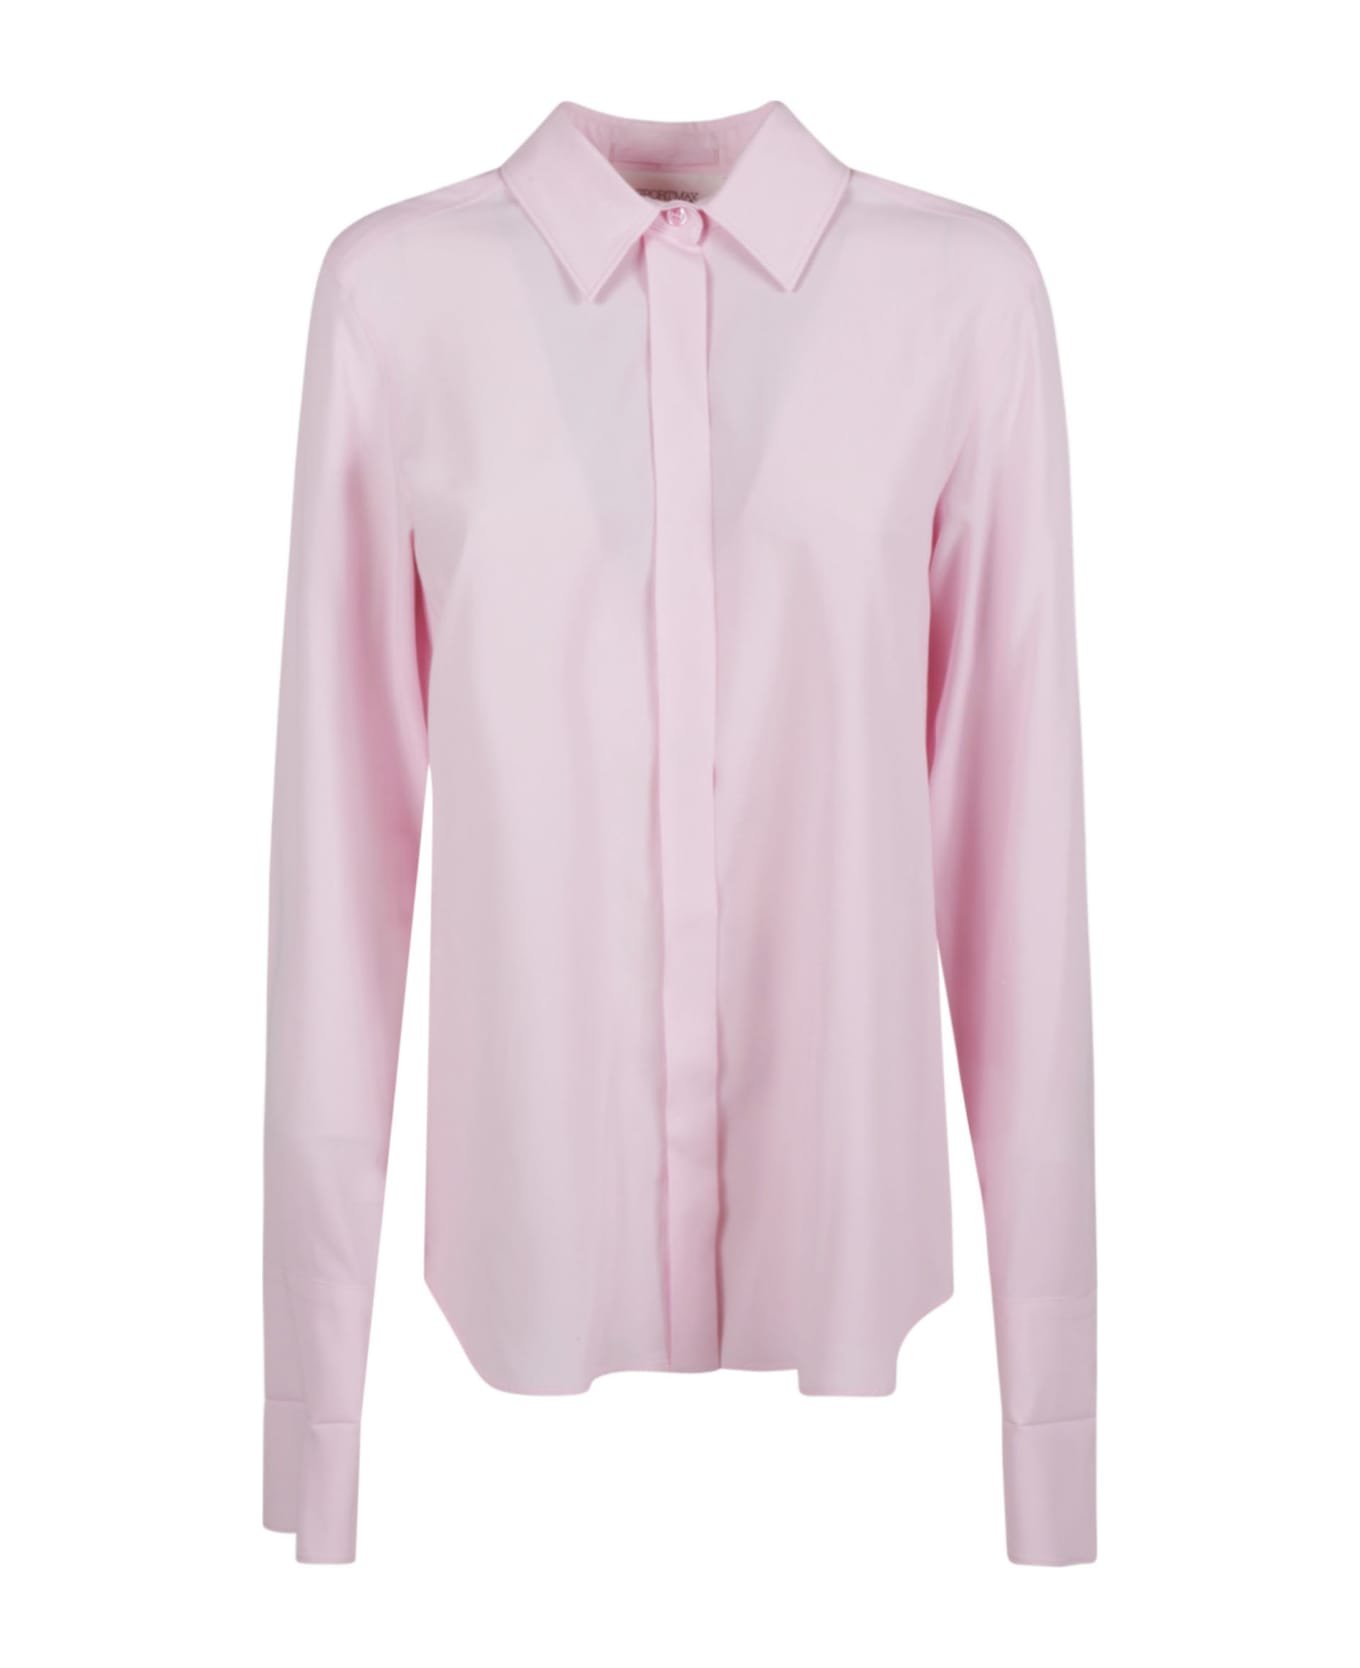 SportMax Ciro Shirt - Rosa シャツ